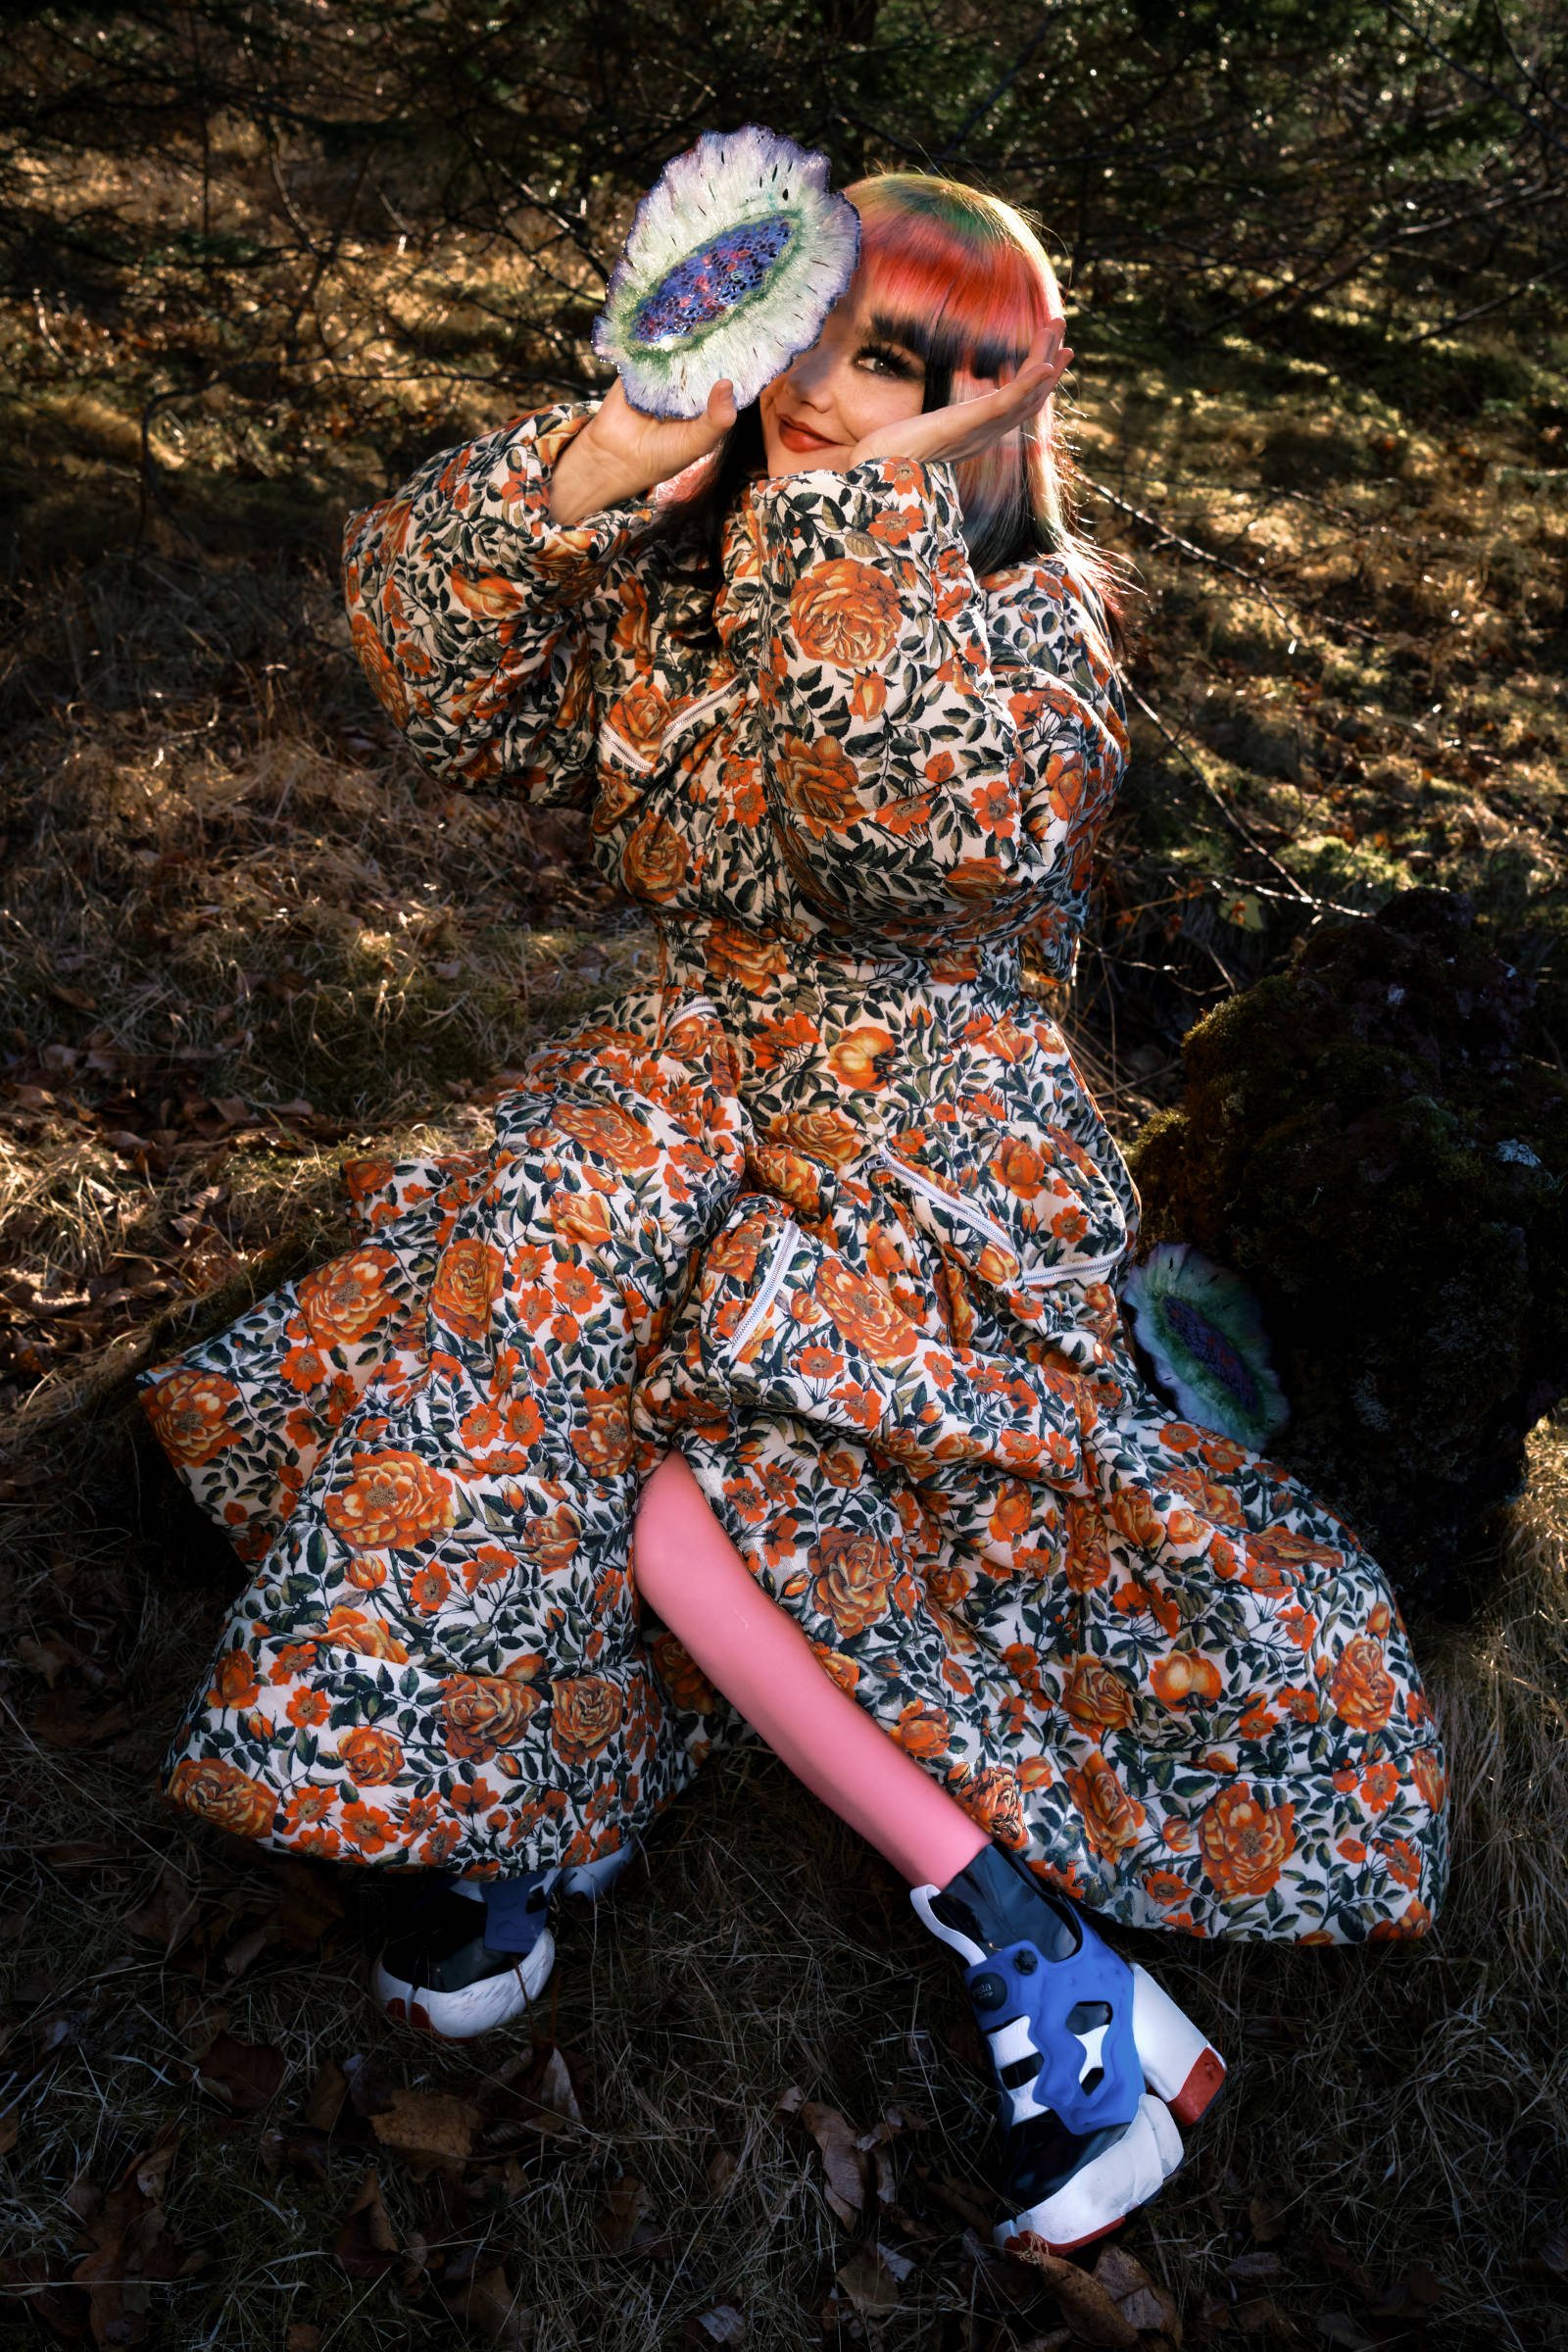 Björk holding the "Floaters" brooches I Photo by Vidar Logi I Styling by Edda Gudmundsdottir I Makeup by Sunna Björk I Dress by Kenzo I Wig by Tomihiro Kono